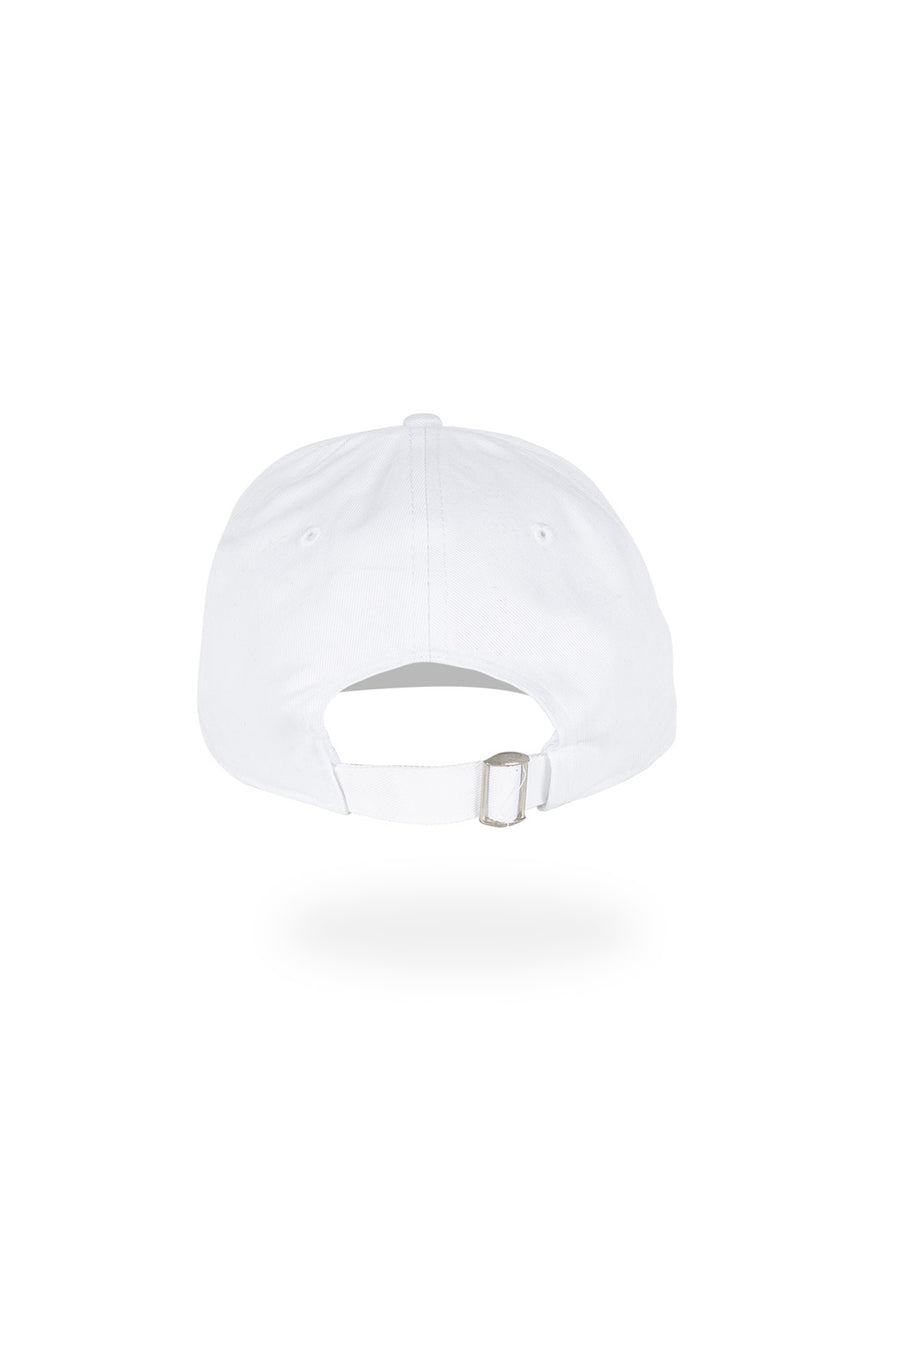 Rewired Classic Baseball Cap- White/ Black